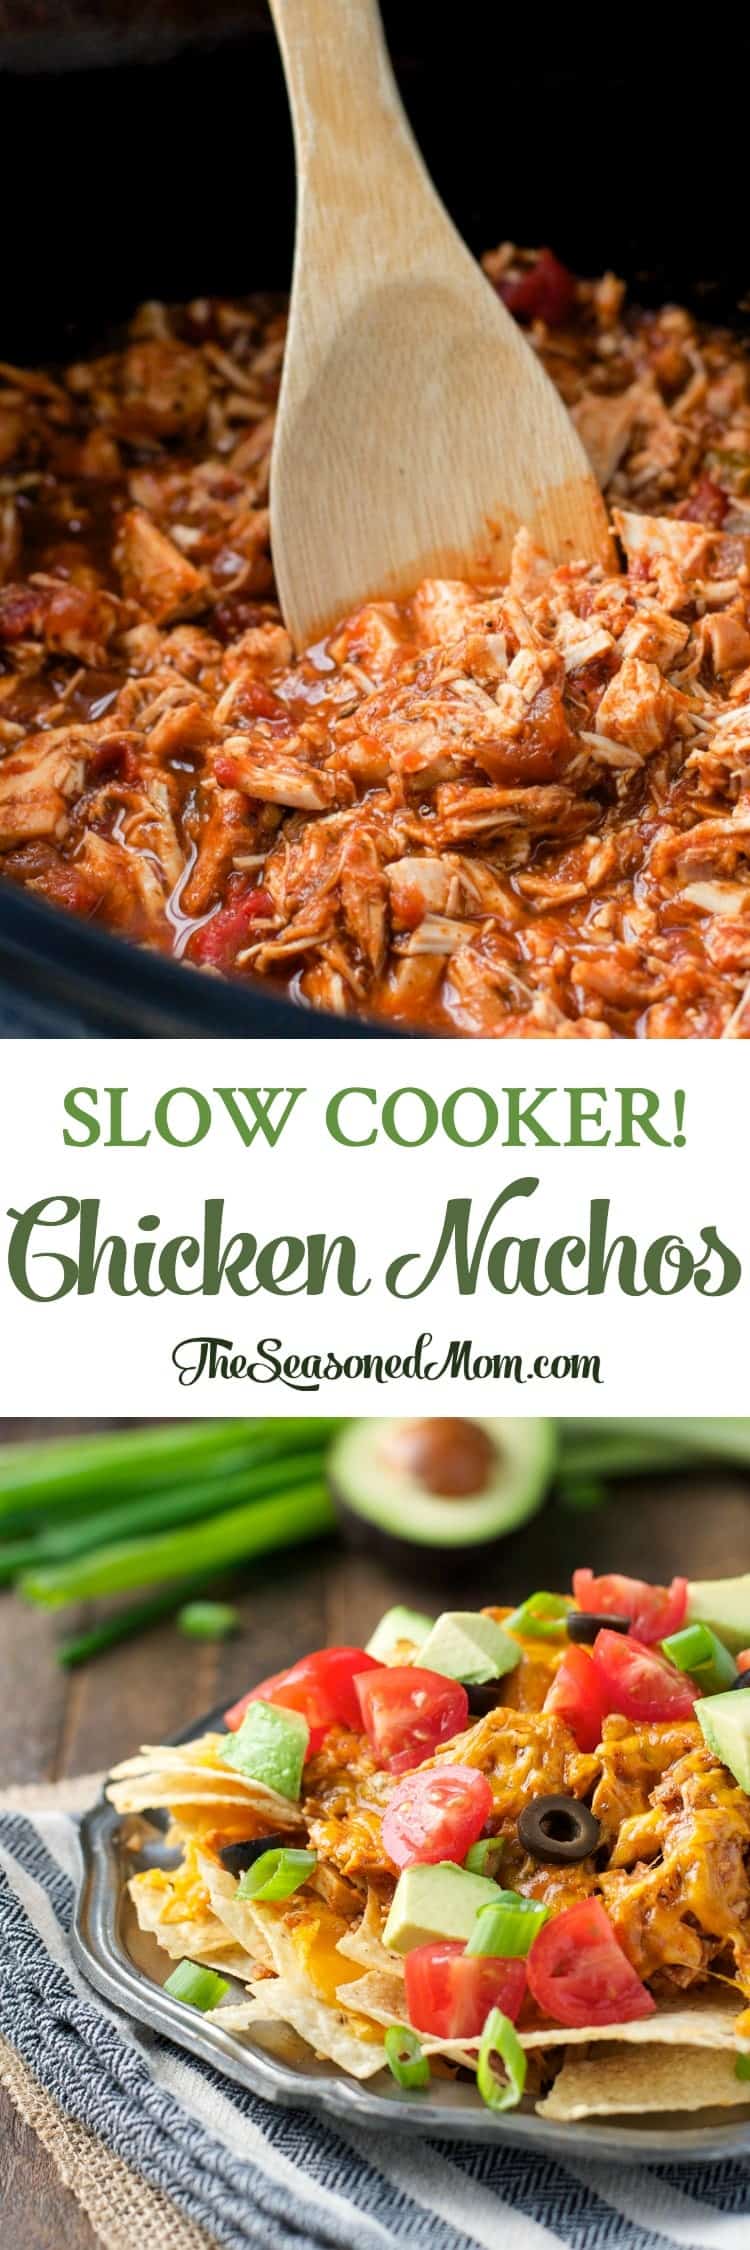 Slow Cooker Chicken Nachos - The Seasoned Mom